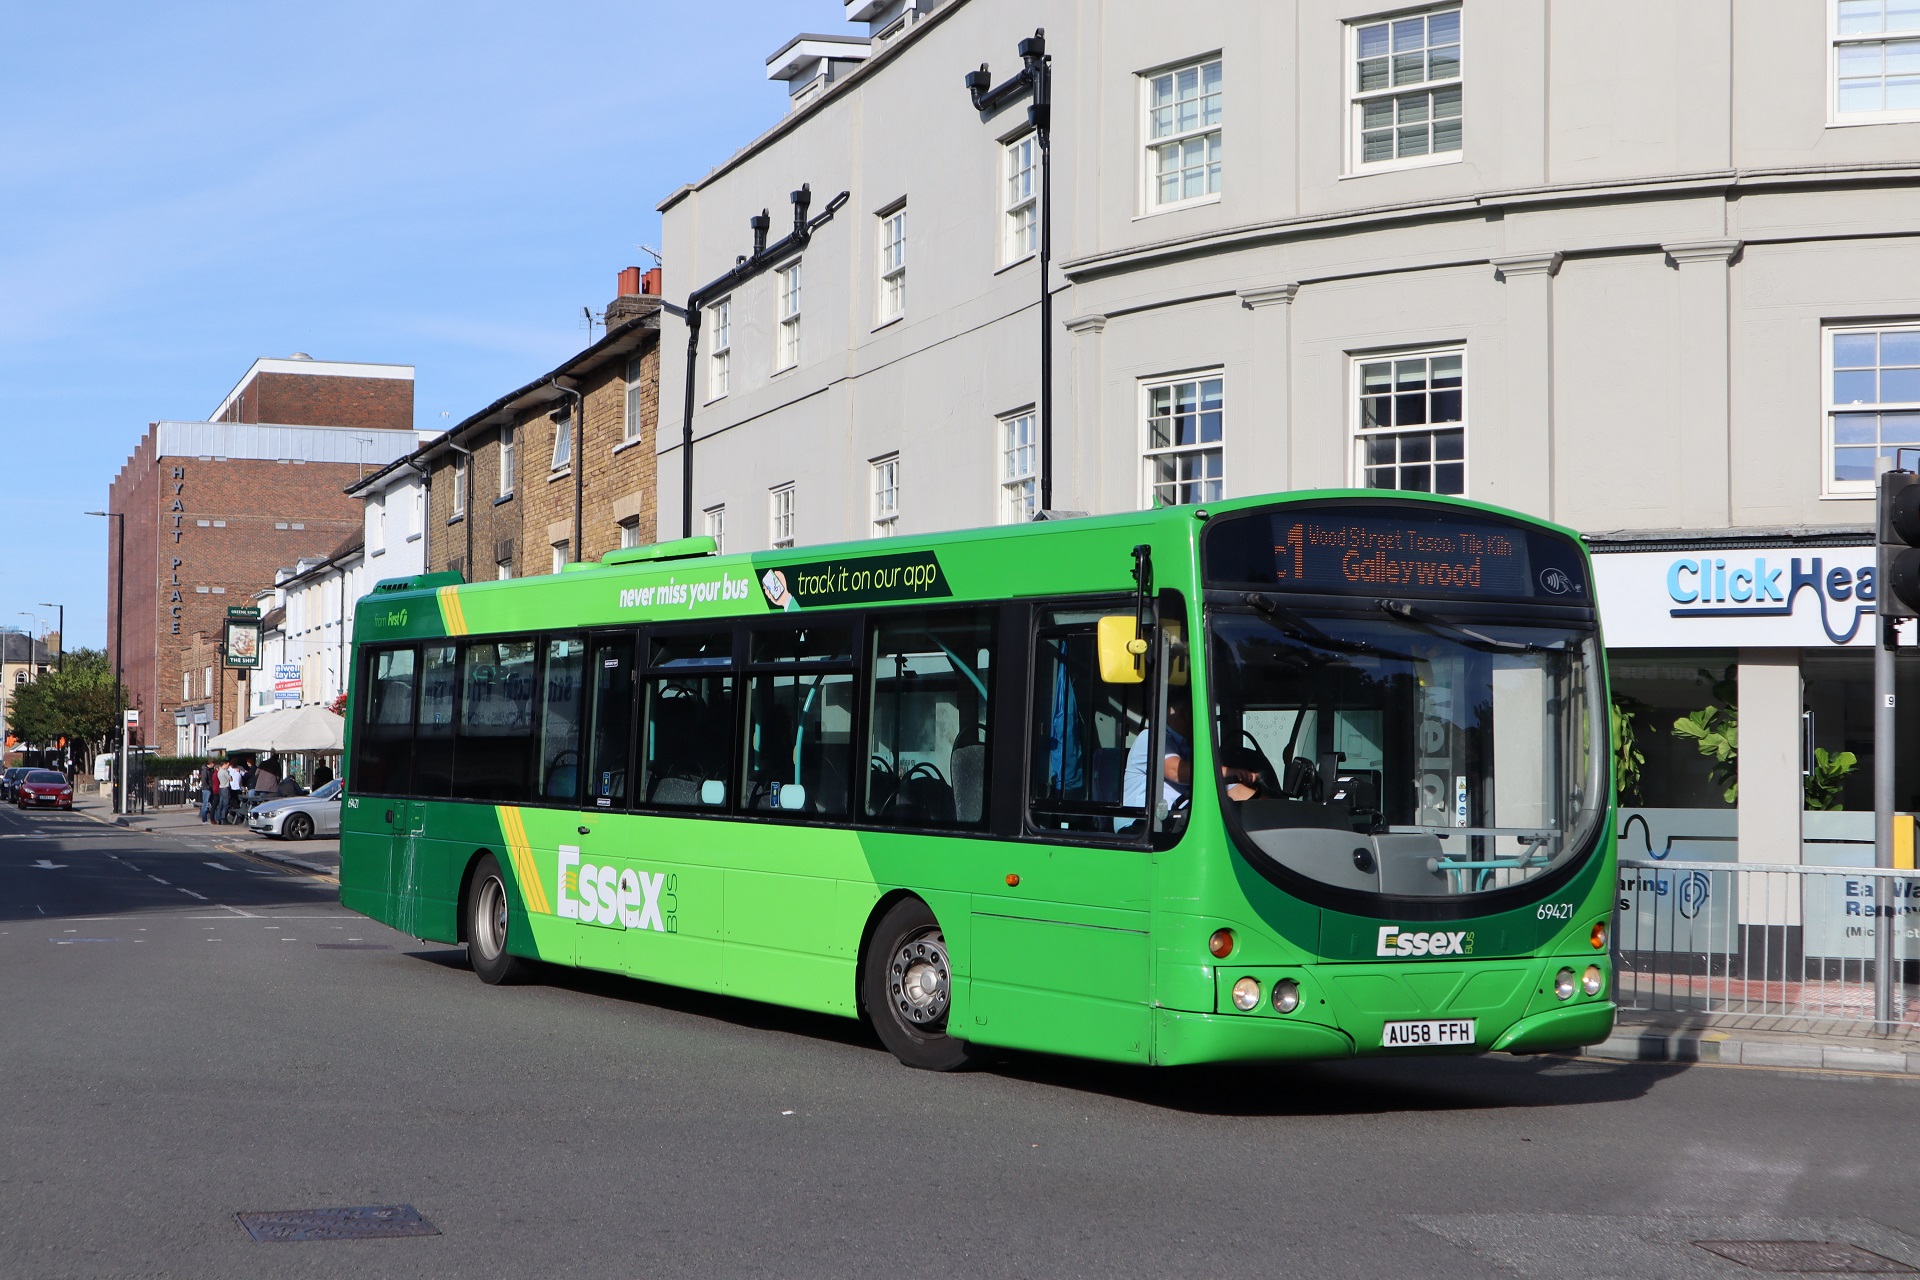 Still no clarity on long-term bus funding plans